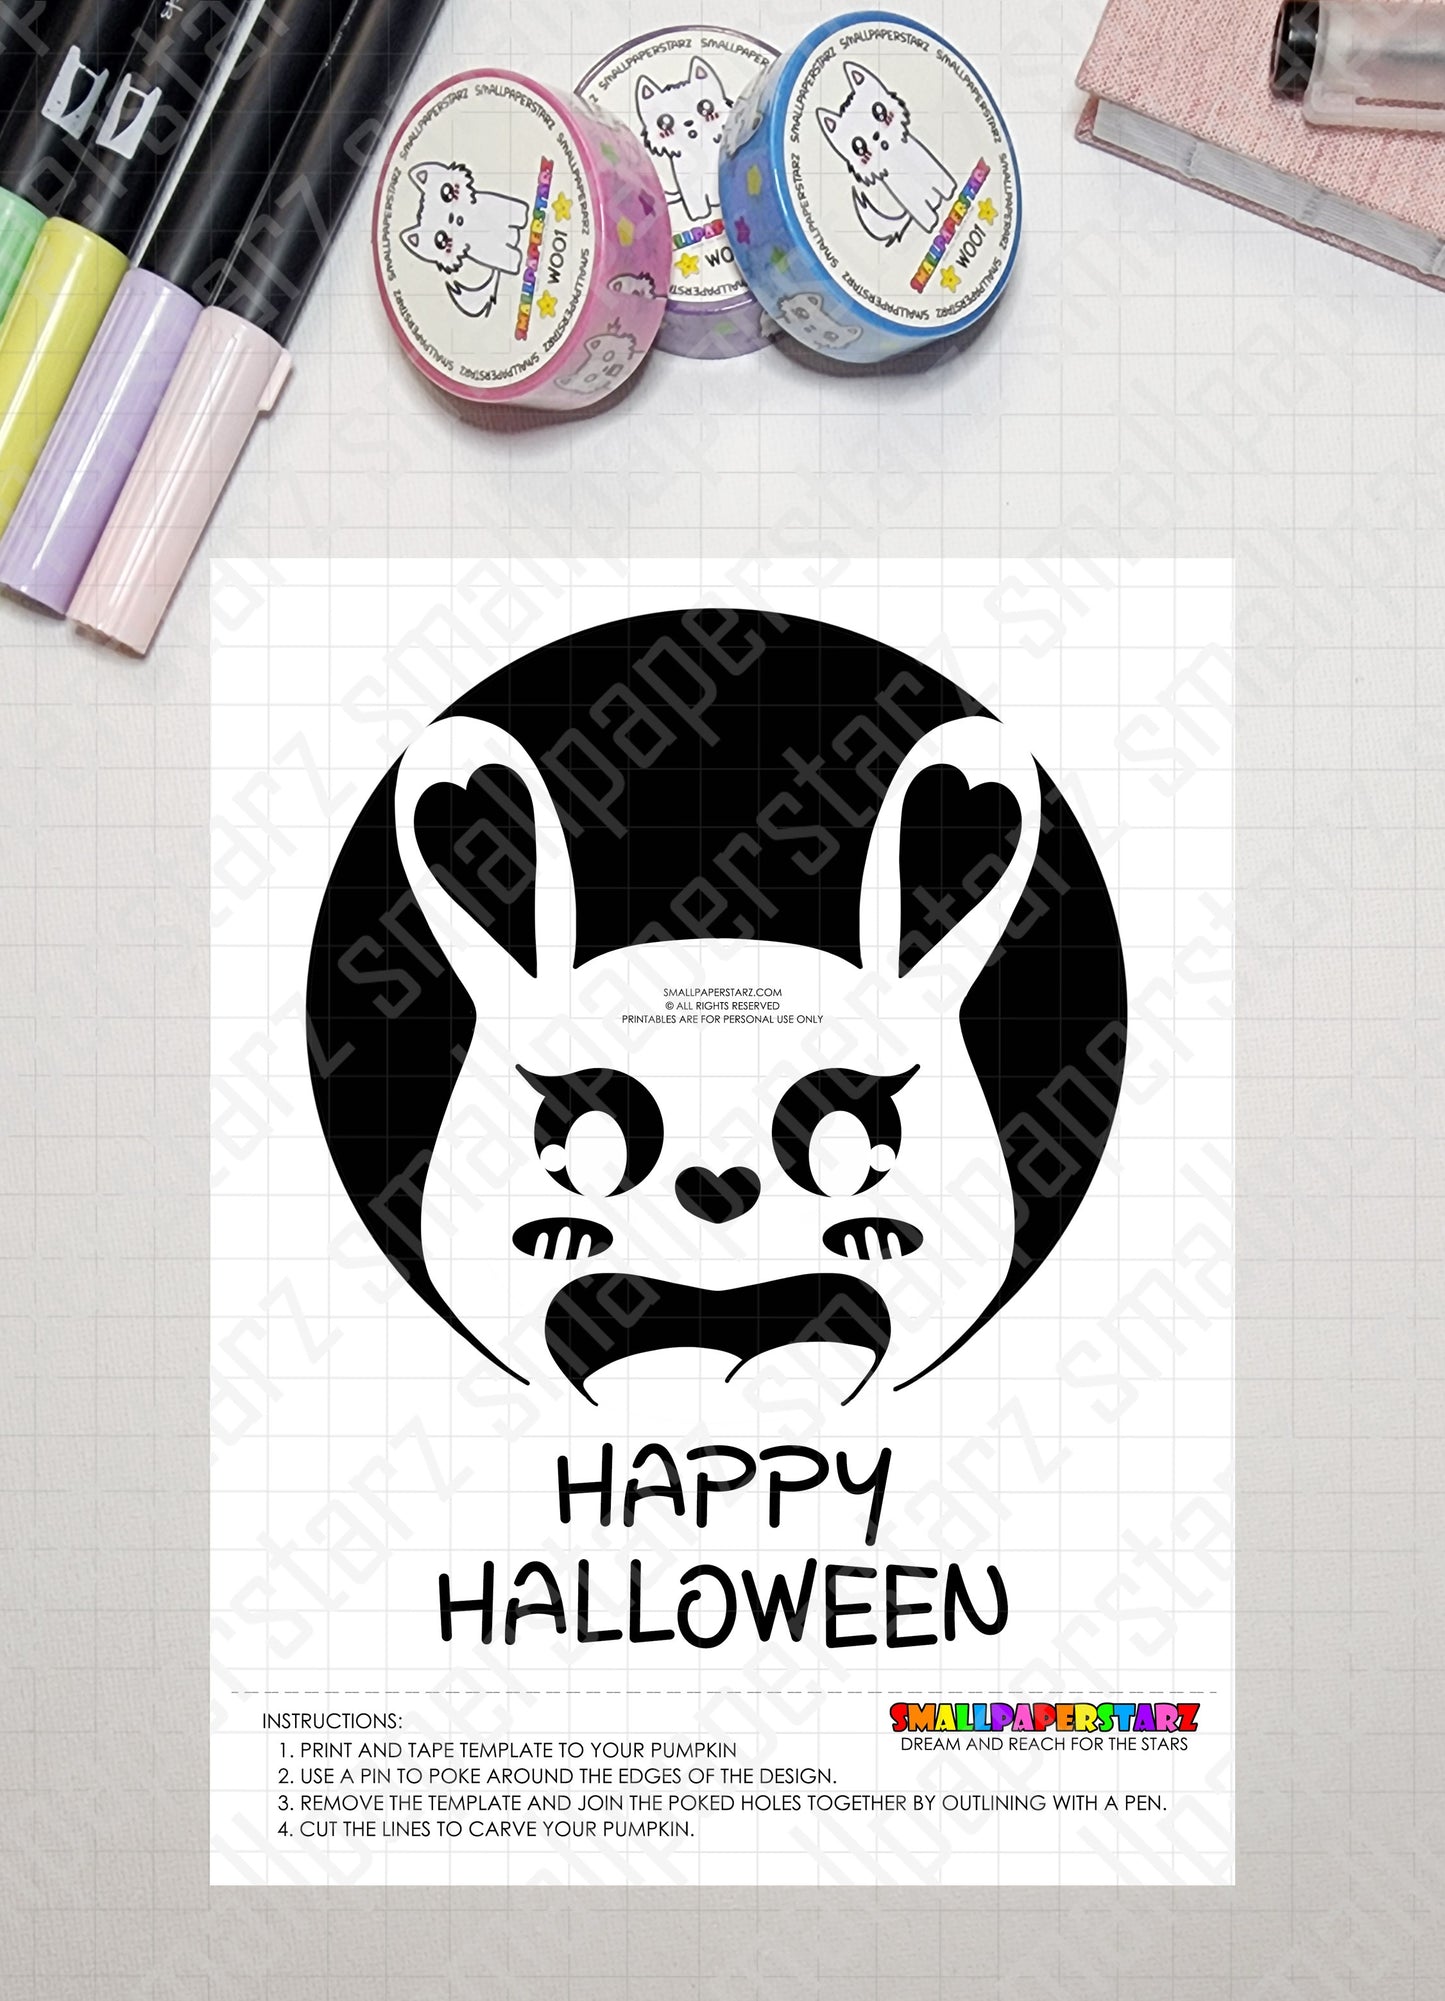 PP001 - Lola Bunny Halloween Pumpkin Carving Jack-o-lantern Stencil Printable